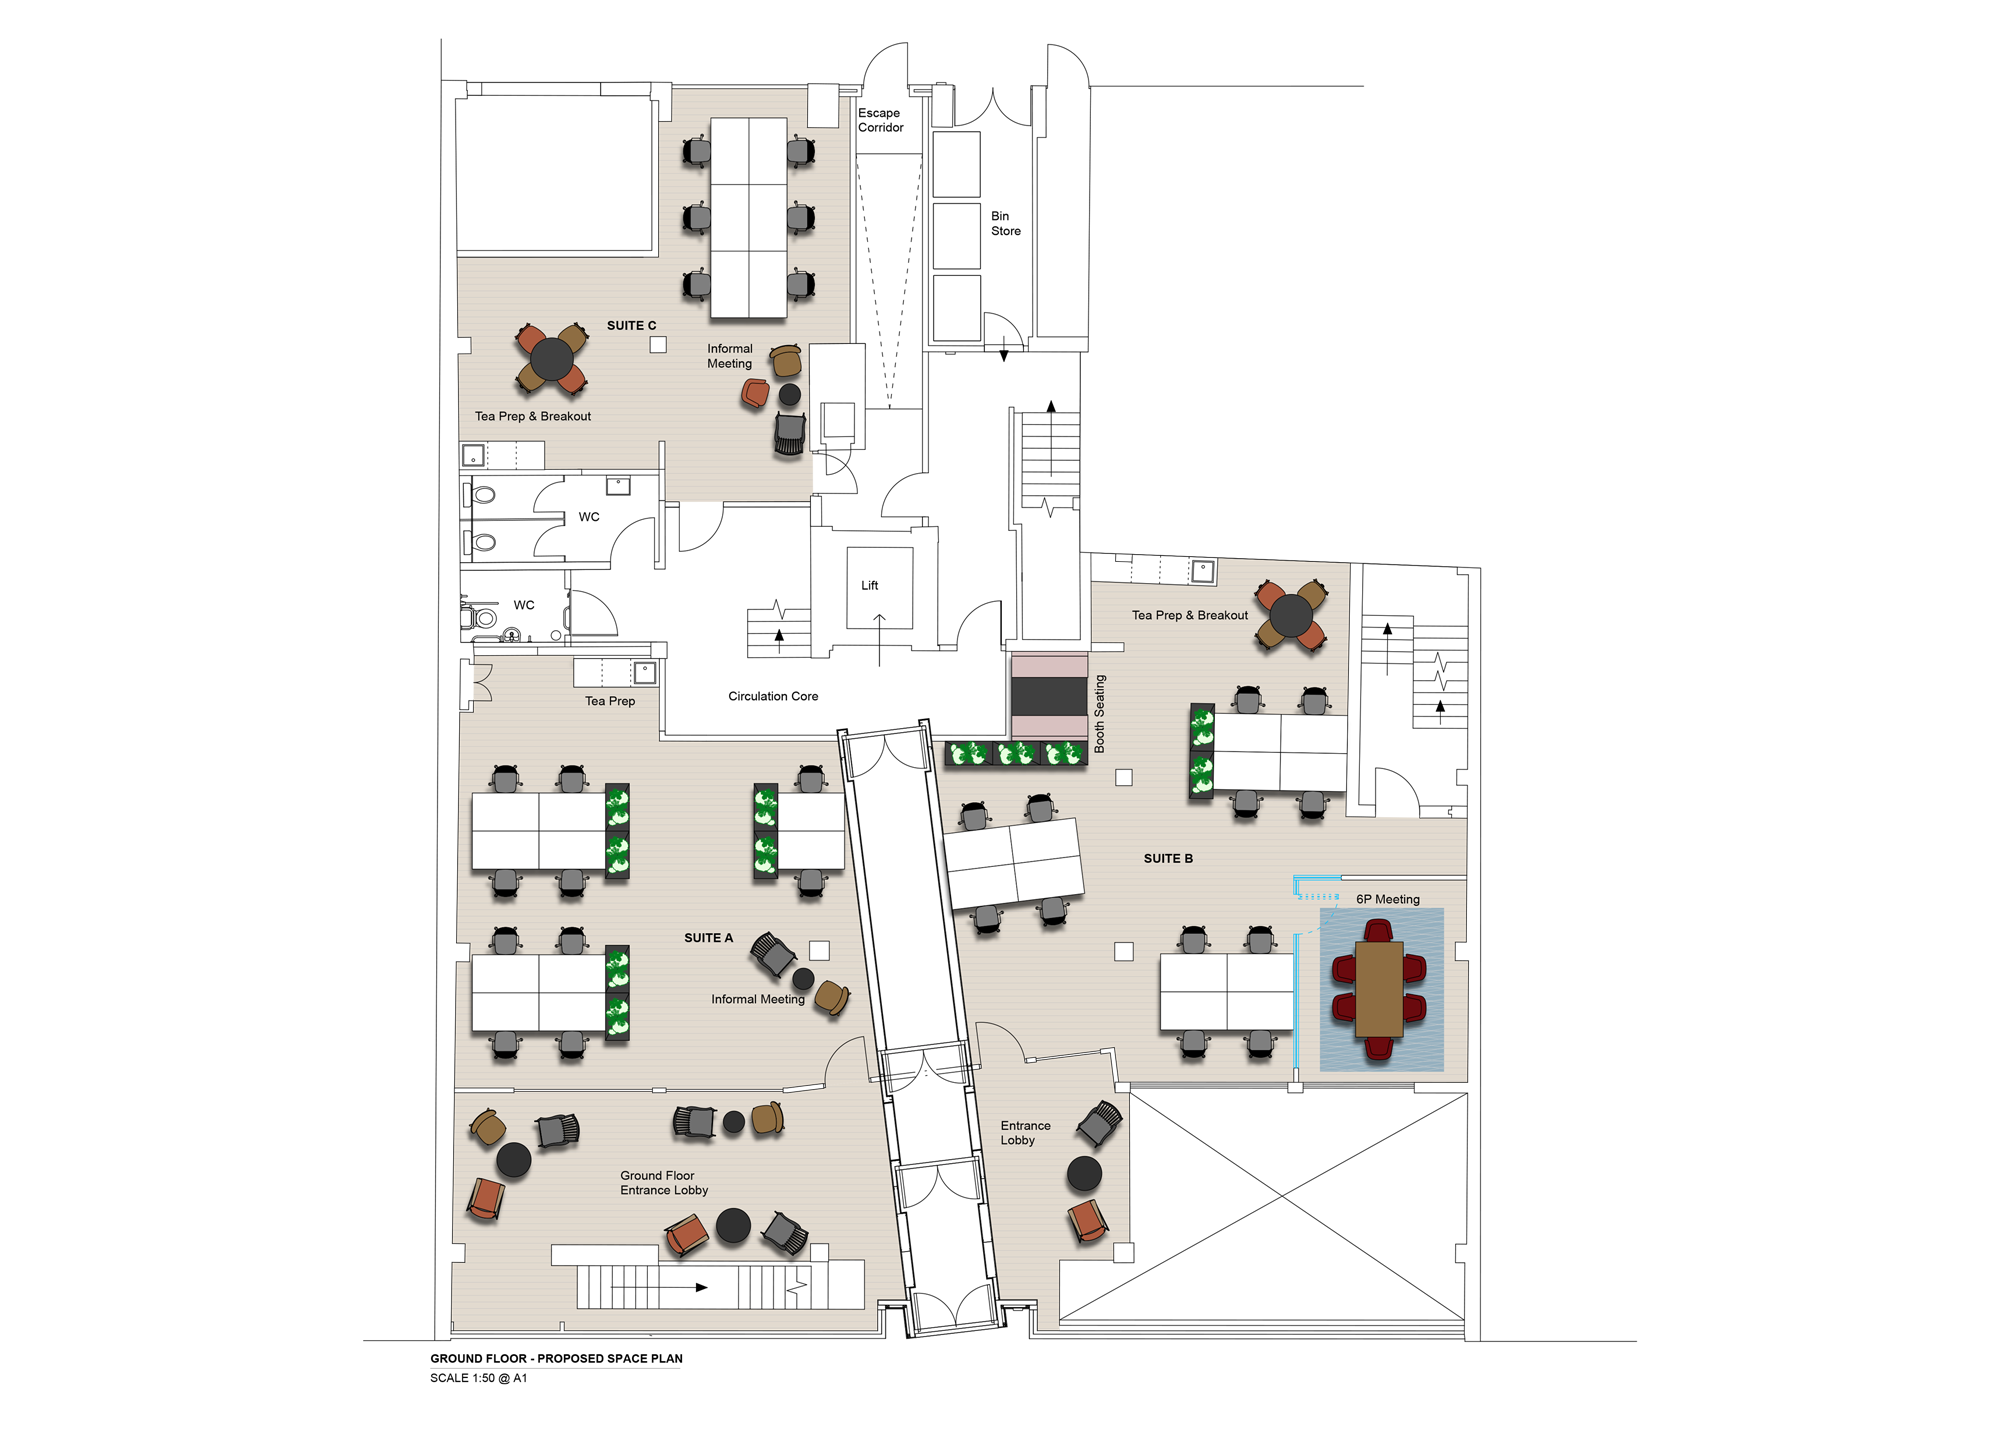 Ground Floor Space Plan 1 8